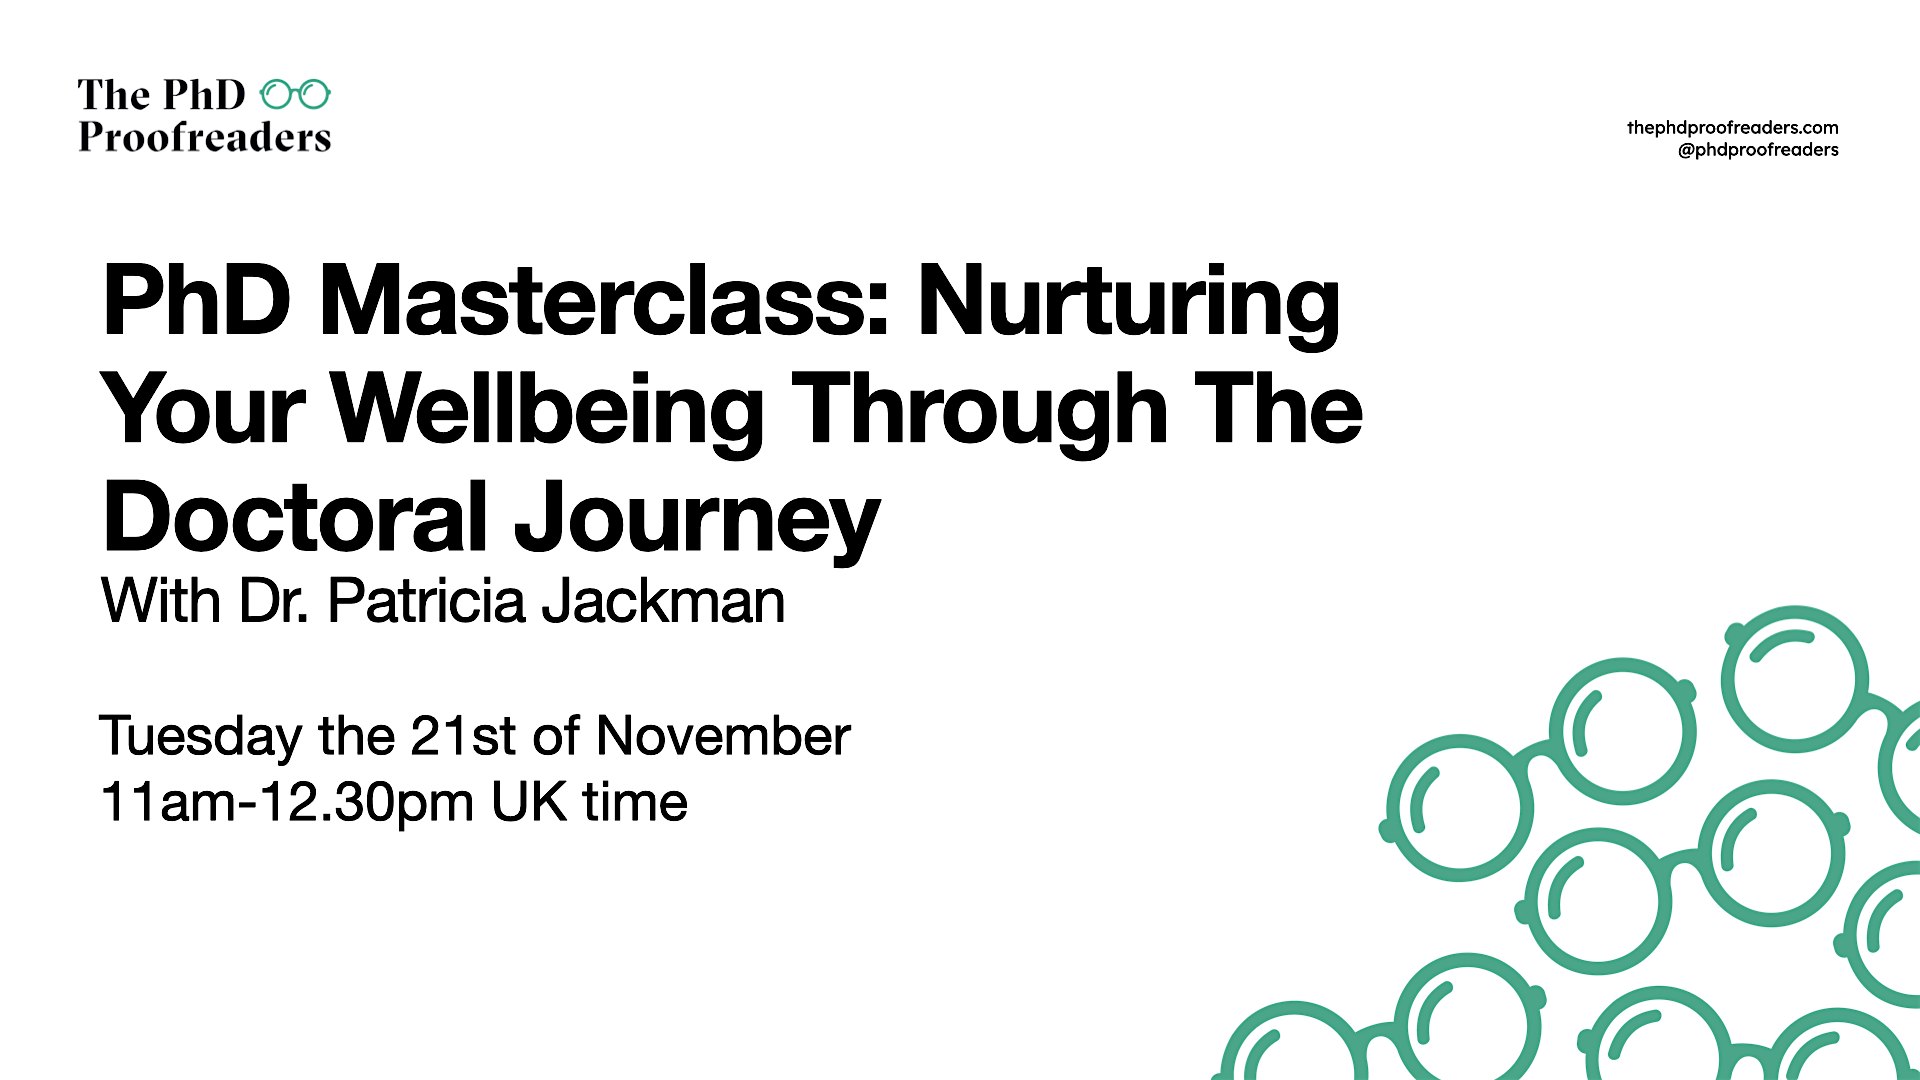 PhD Masterclass: Nurturing Your Wellbeing Through The Doctoral Journey